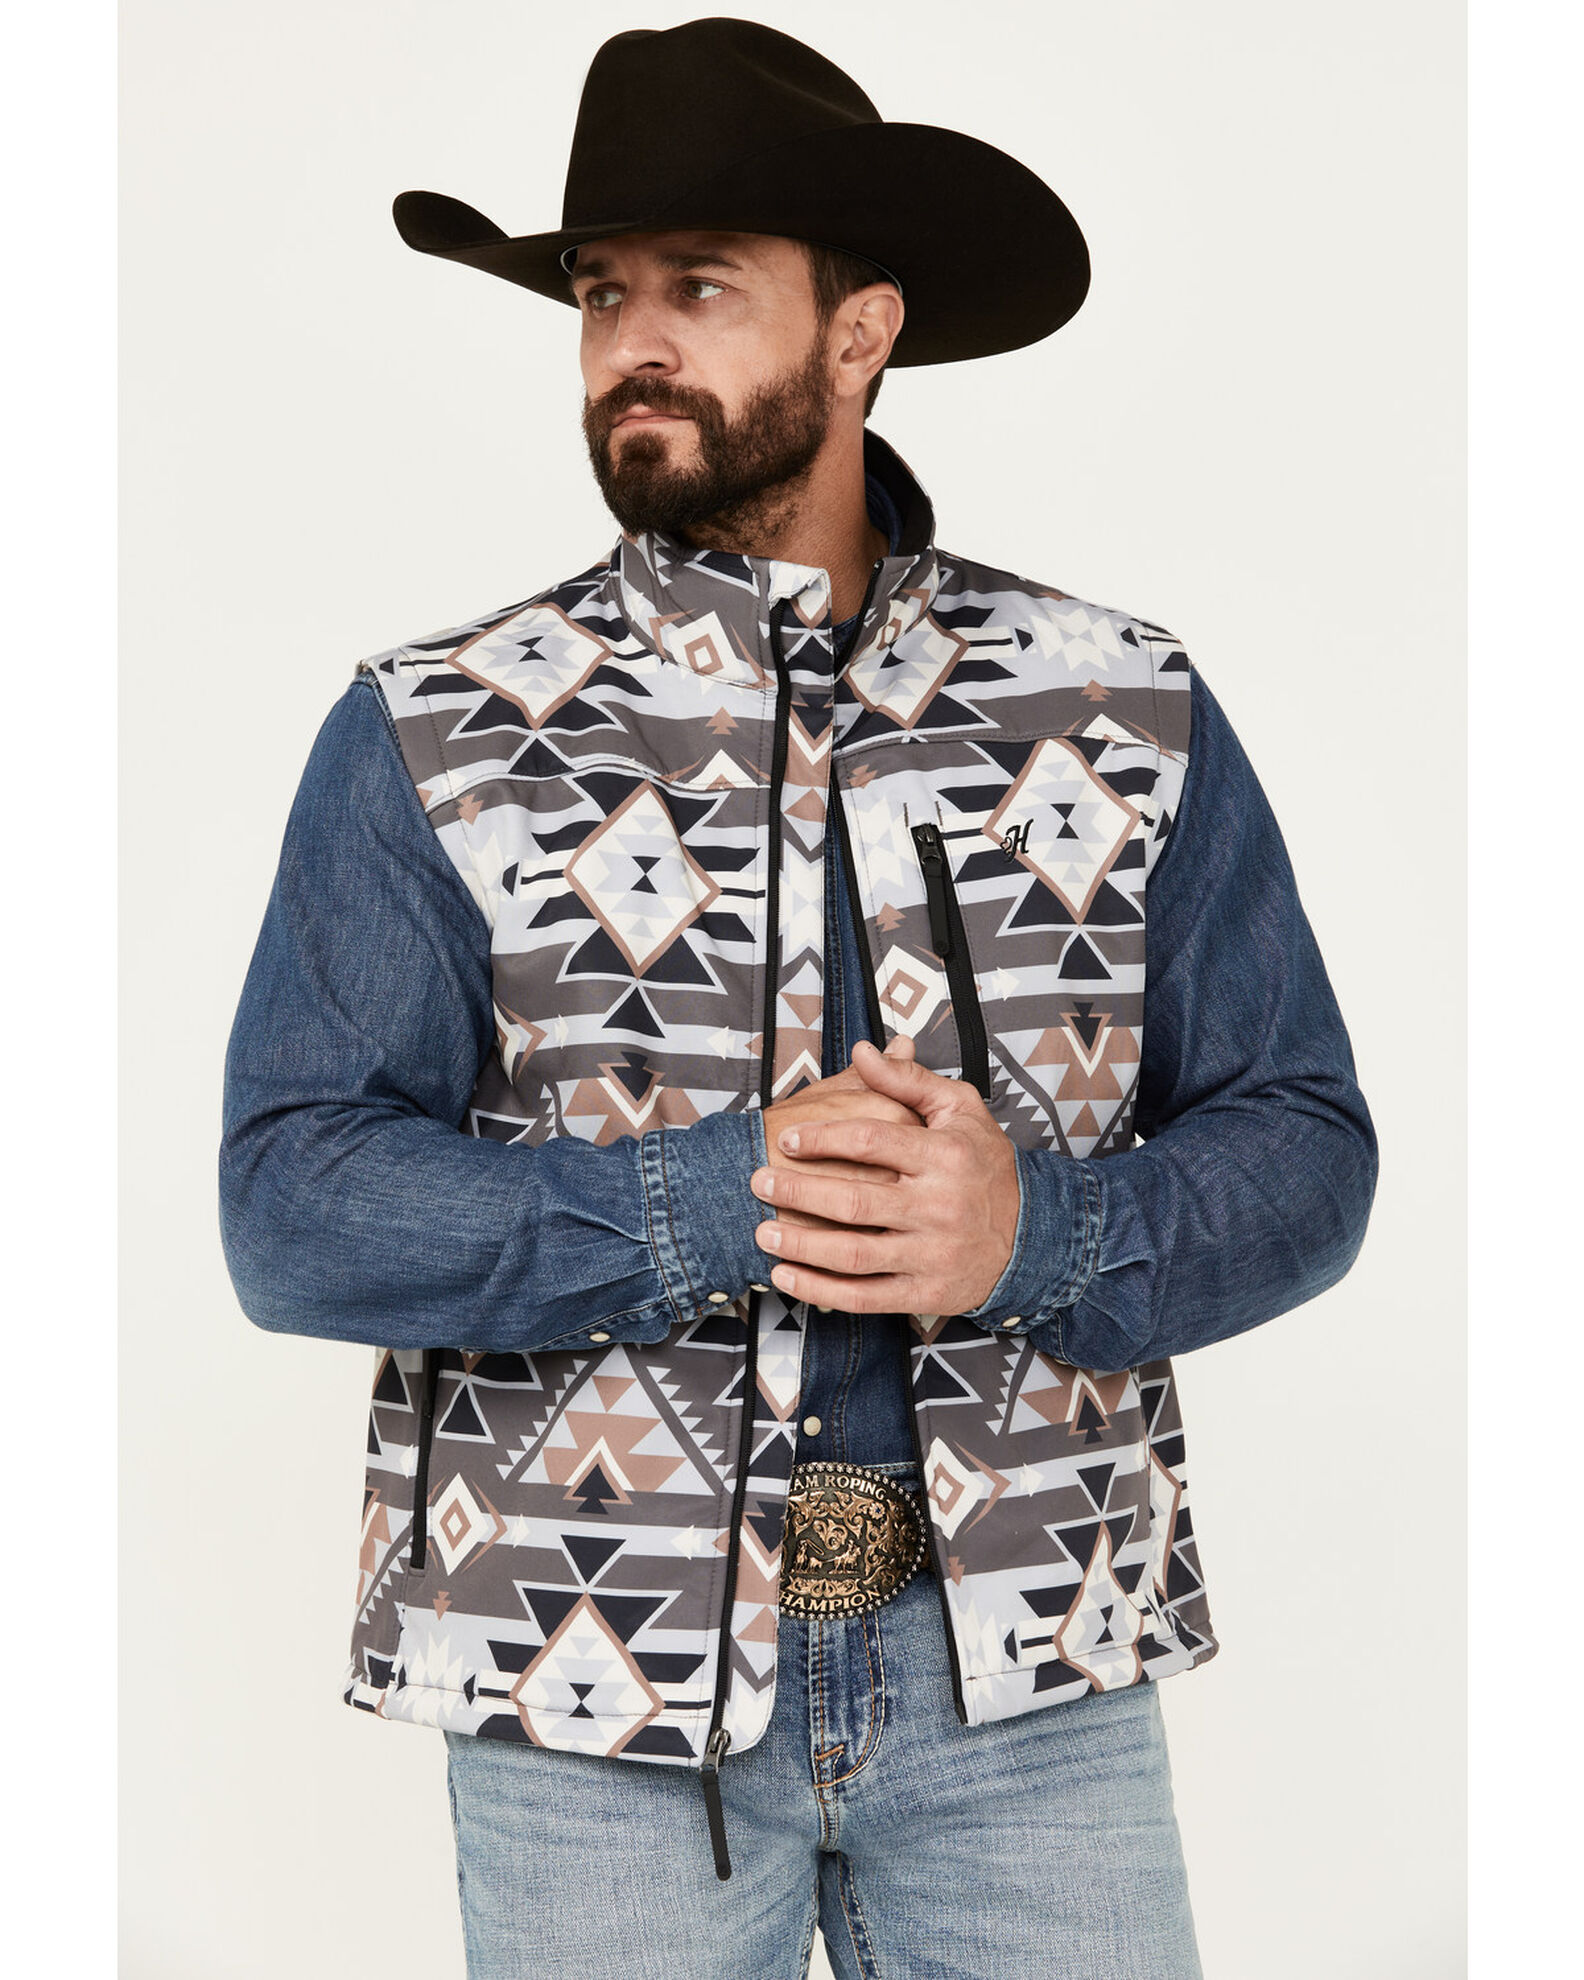 Product Name: Hooey Men's Southwestern Print Softshell Vest